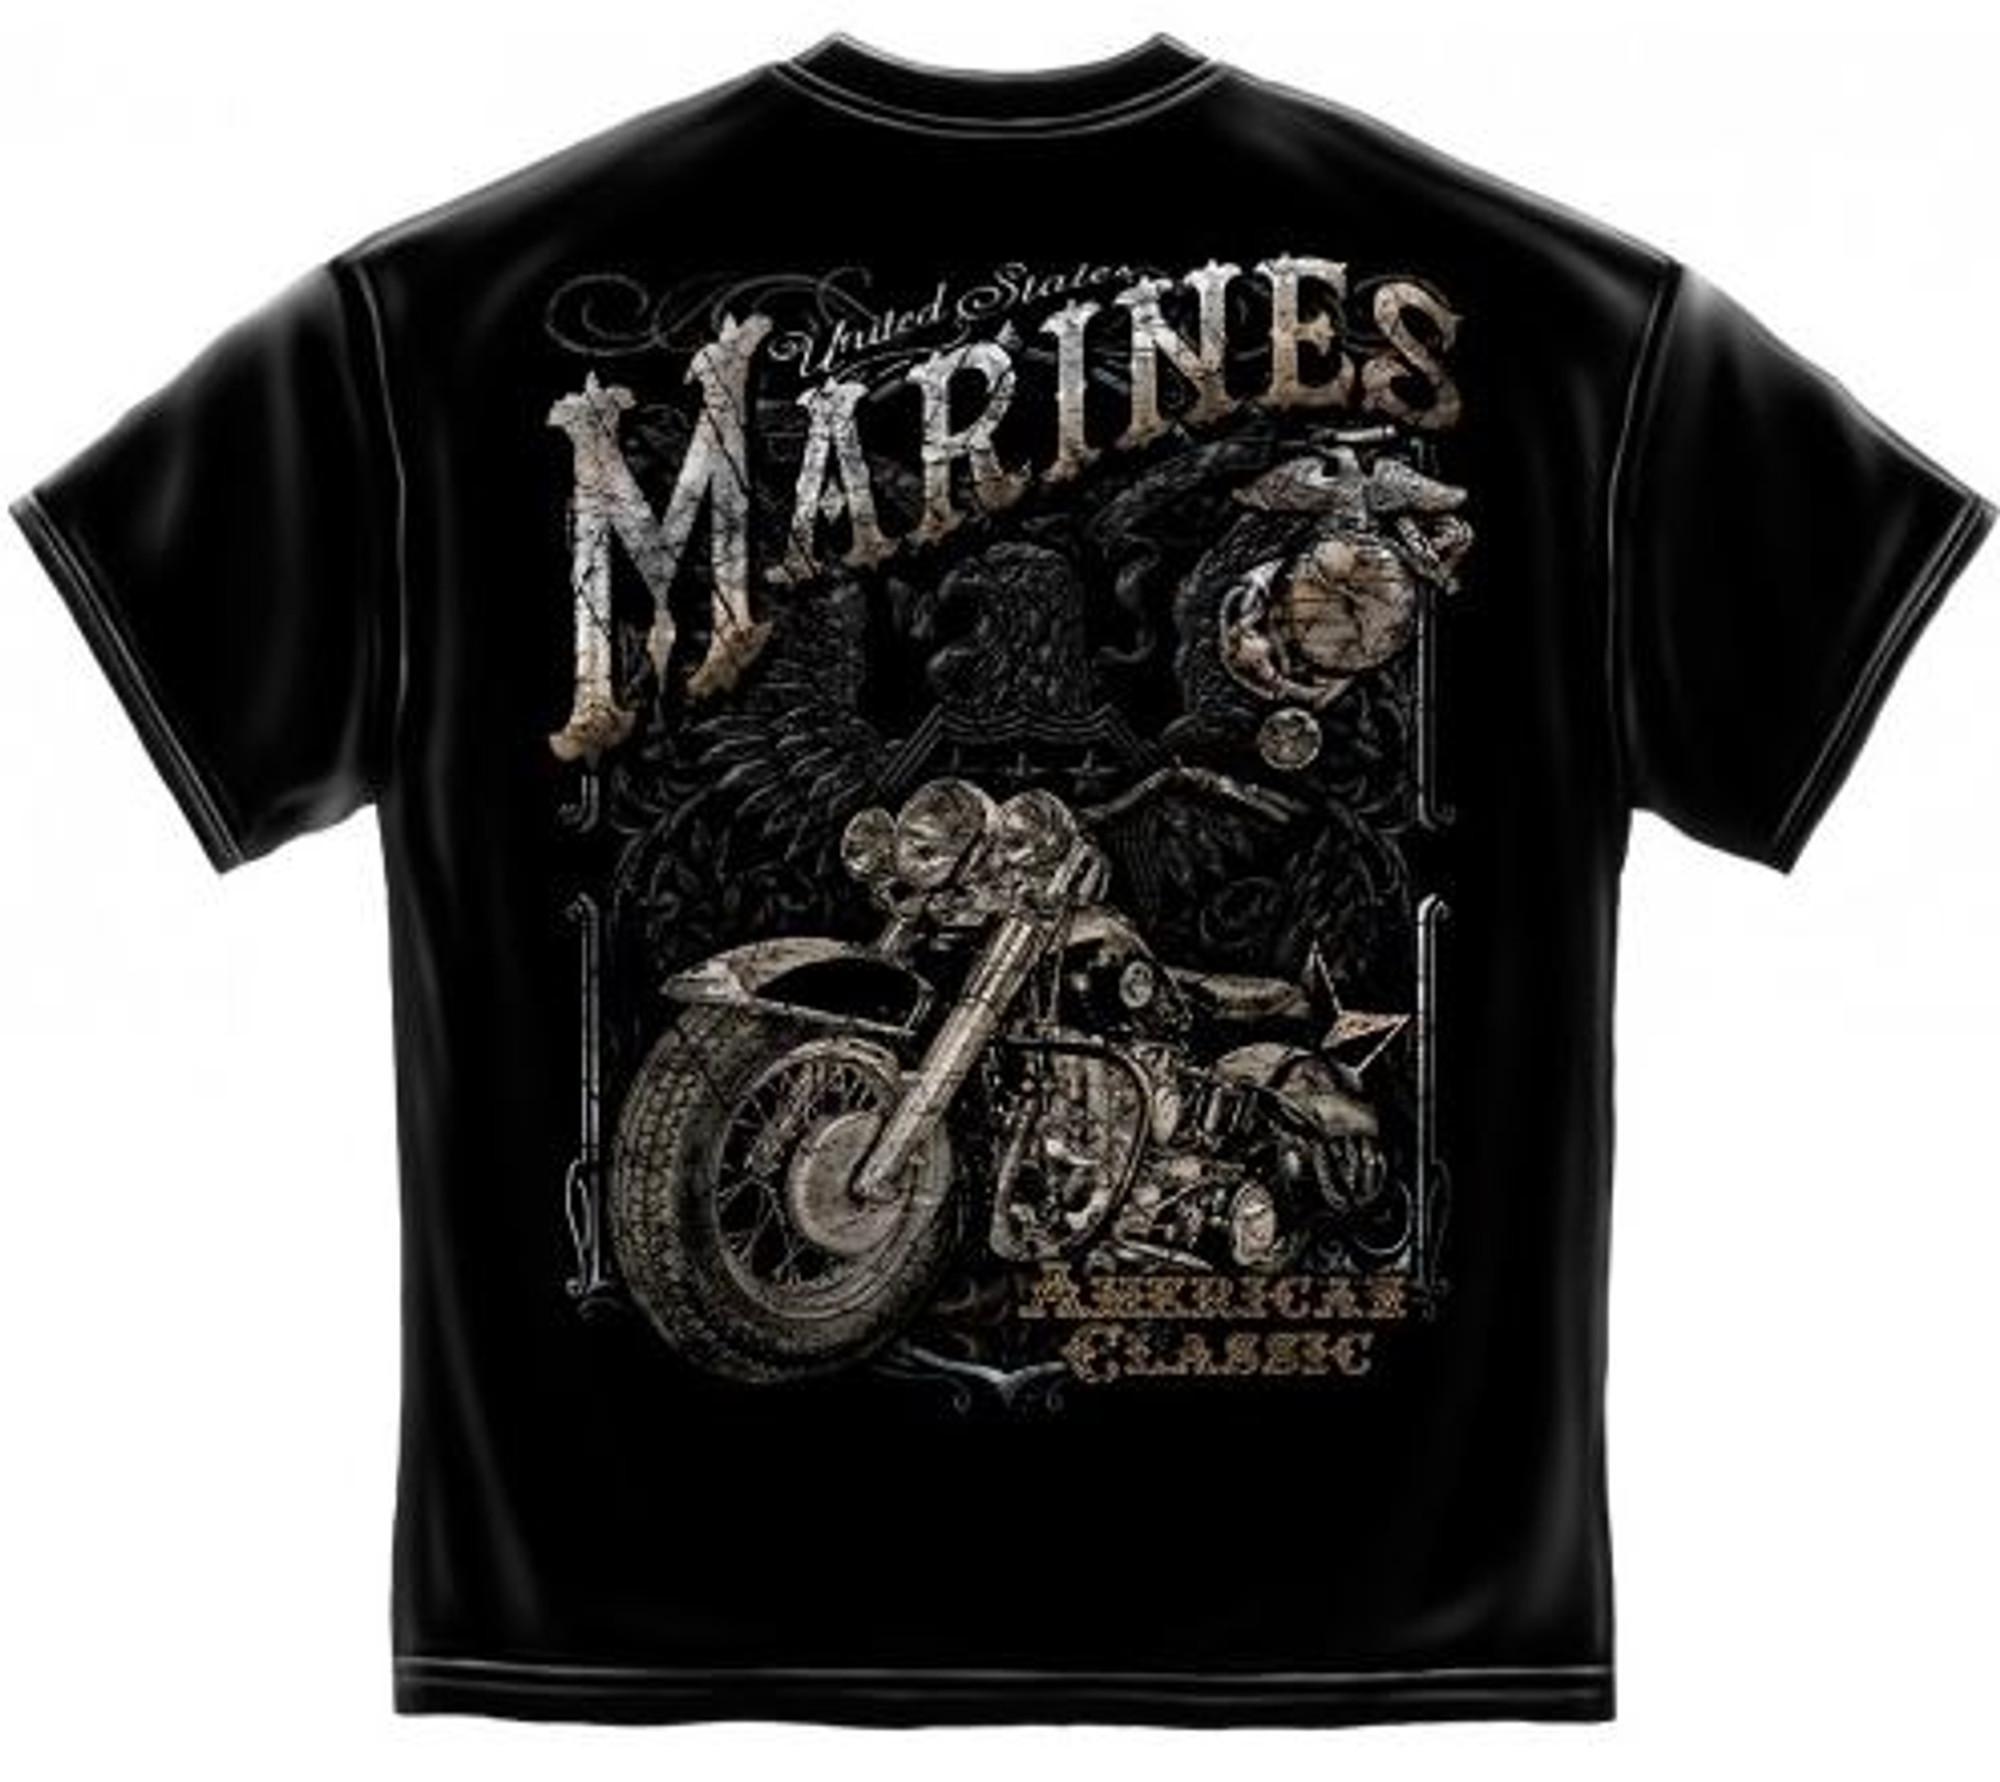 USMC "Marine Biker" T-Shirt